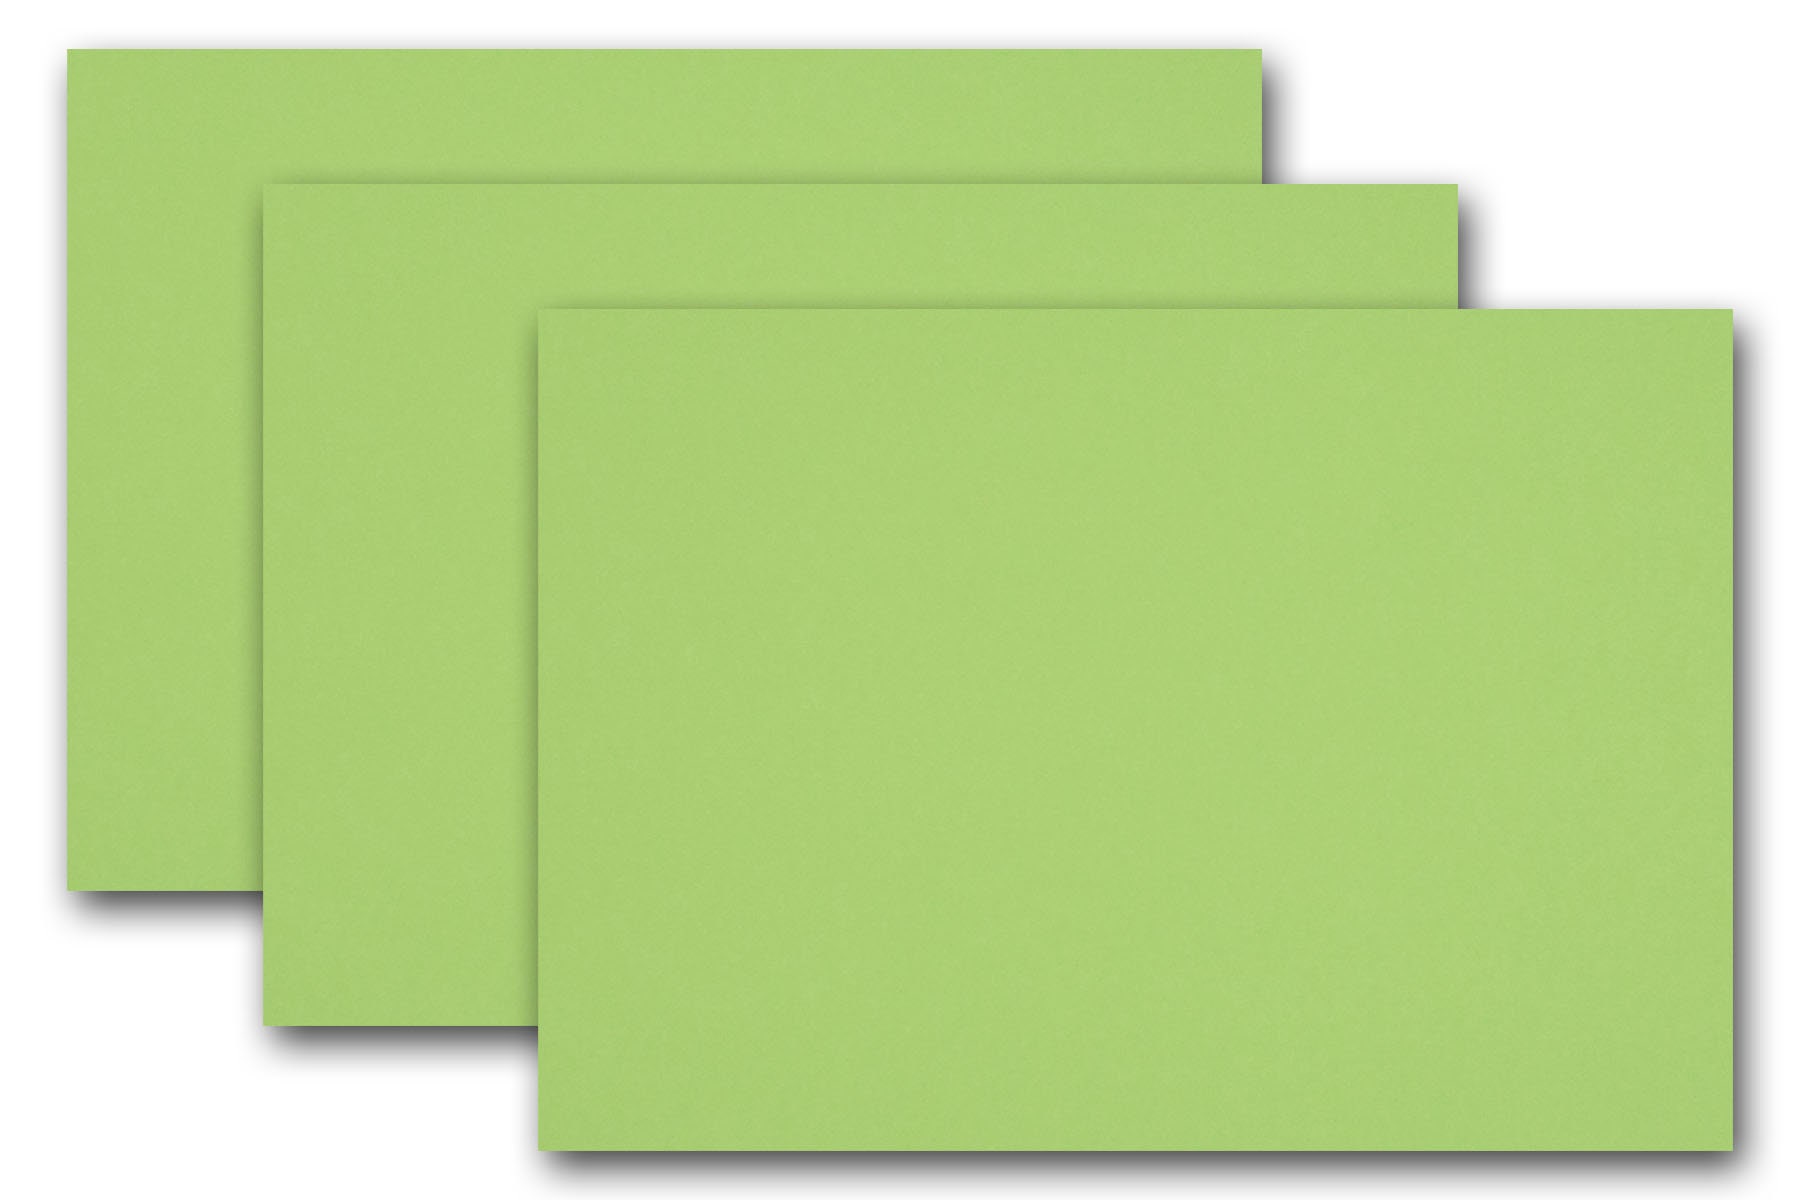 Savoy 100% Cotton Card Stock for Letterpress invitations - CutCardStock